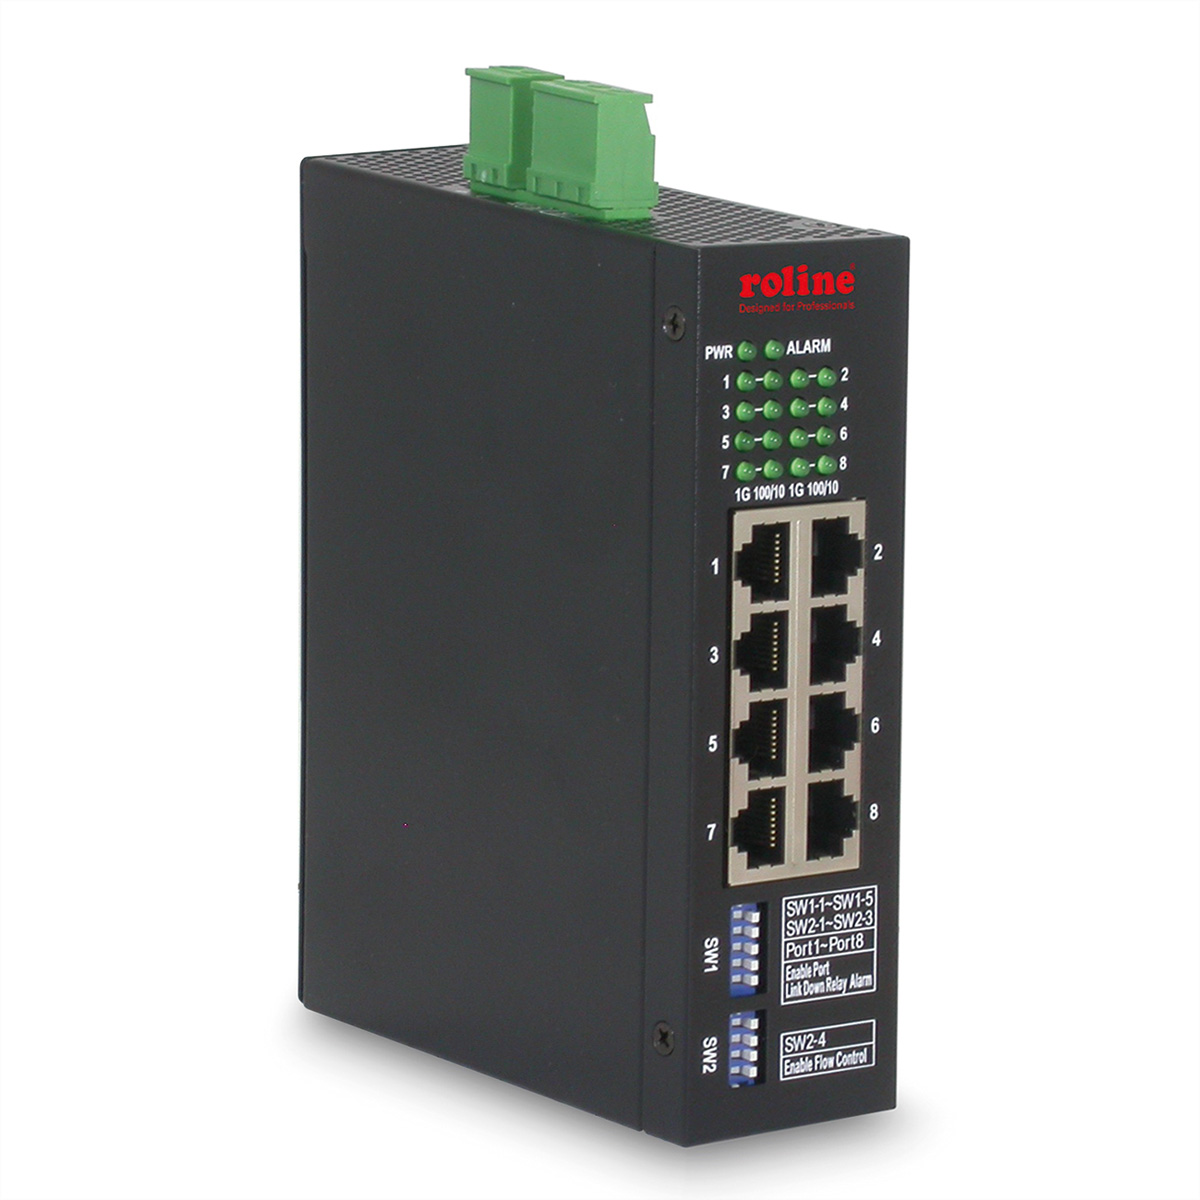 ROLINE Industrial Gigabit Ethernet Switch, 8 Ports, Web Managed (21.13.1136)